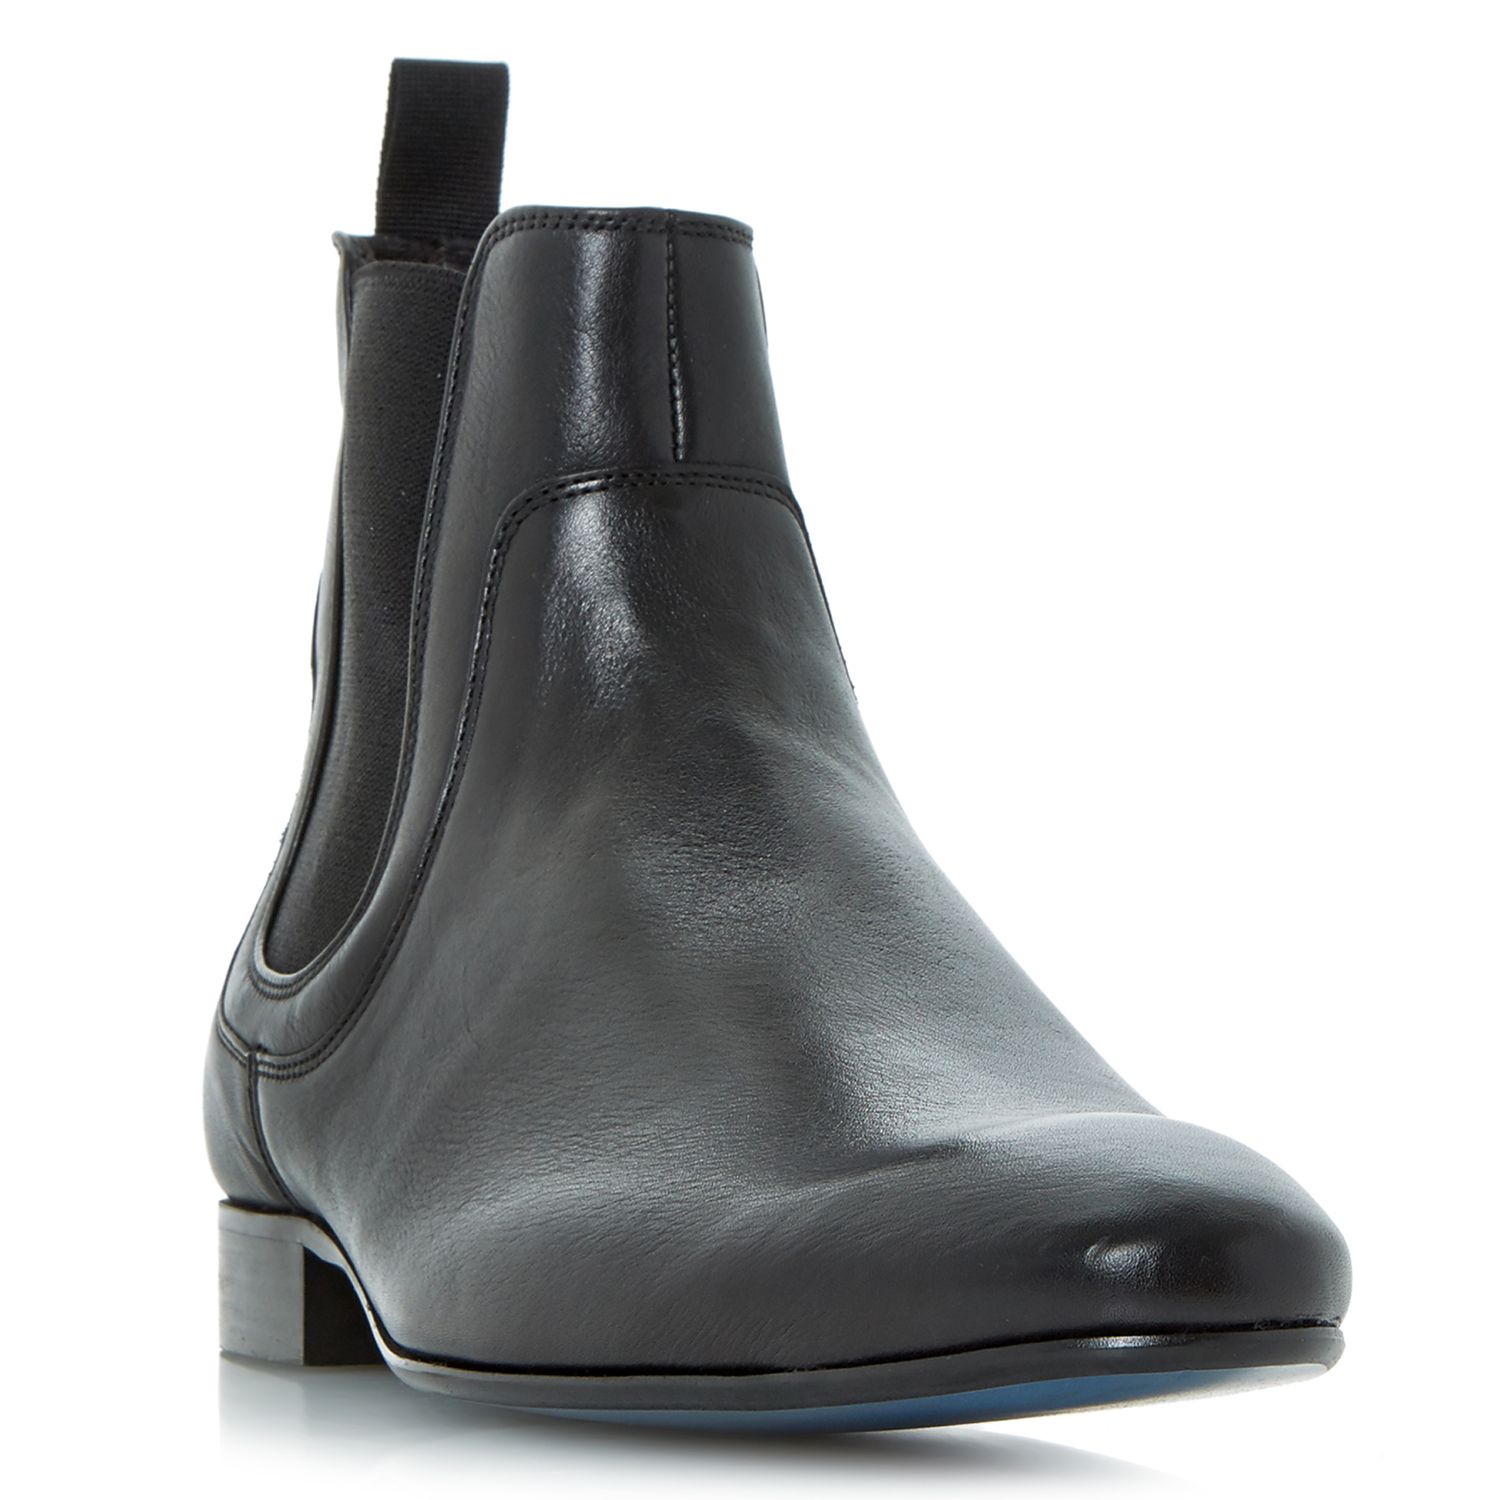 Bertie Maple Leather Chelsea Boots, Black, 12